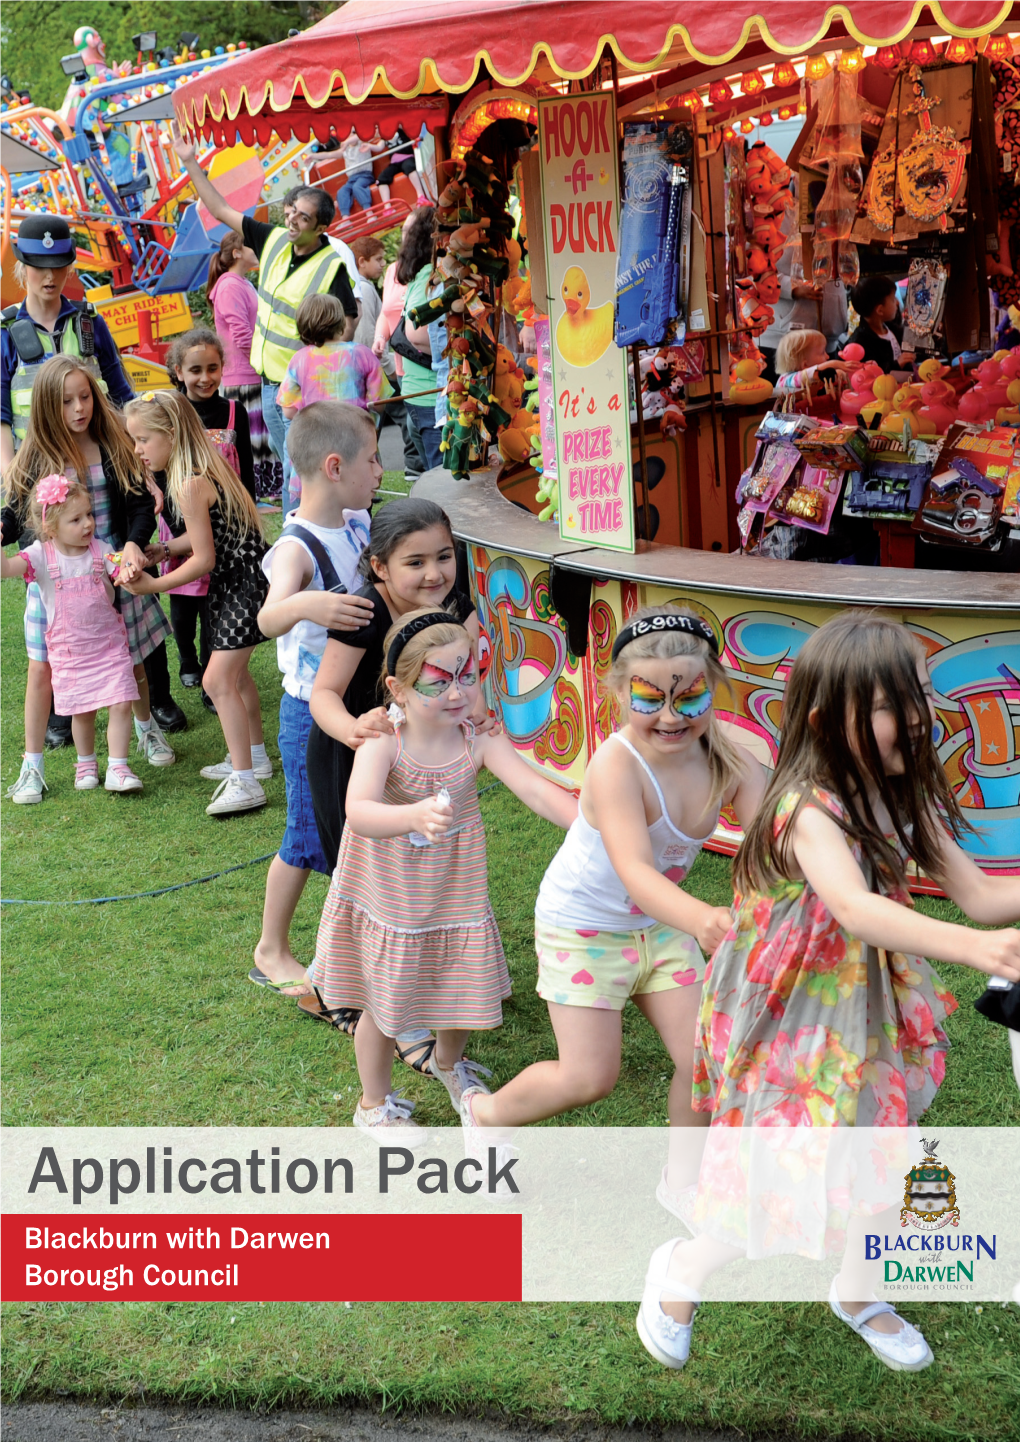 Application Pack Blackburn with Darwen Borough Council Dear Applicant